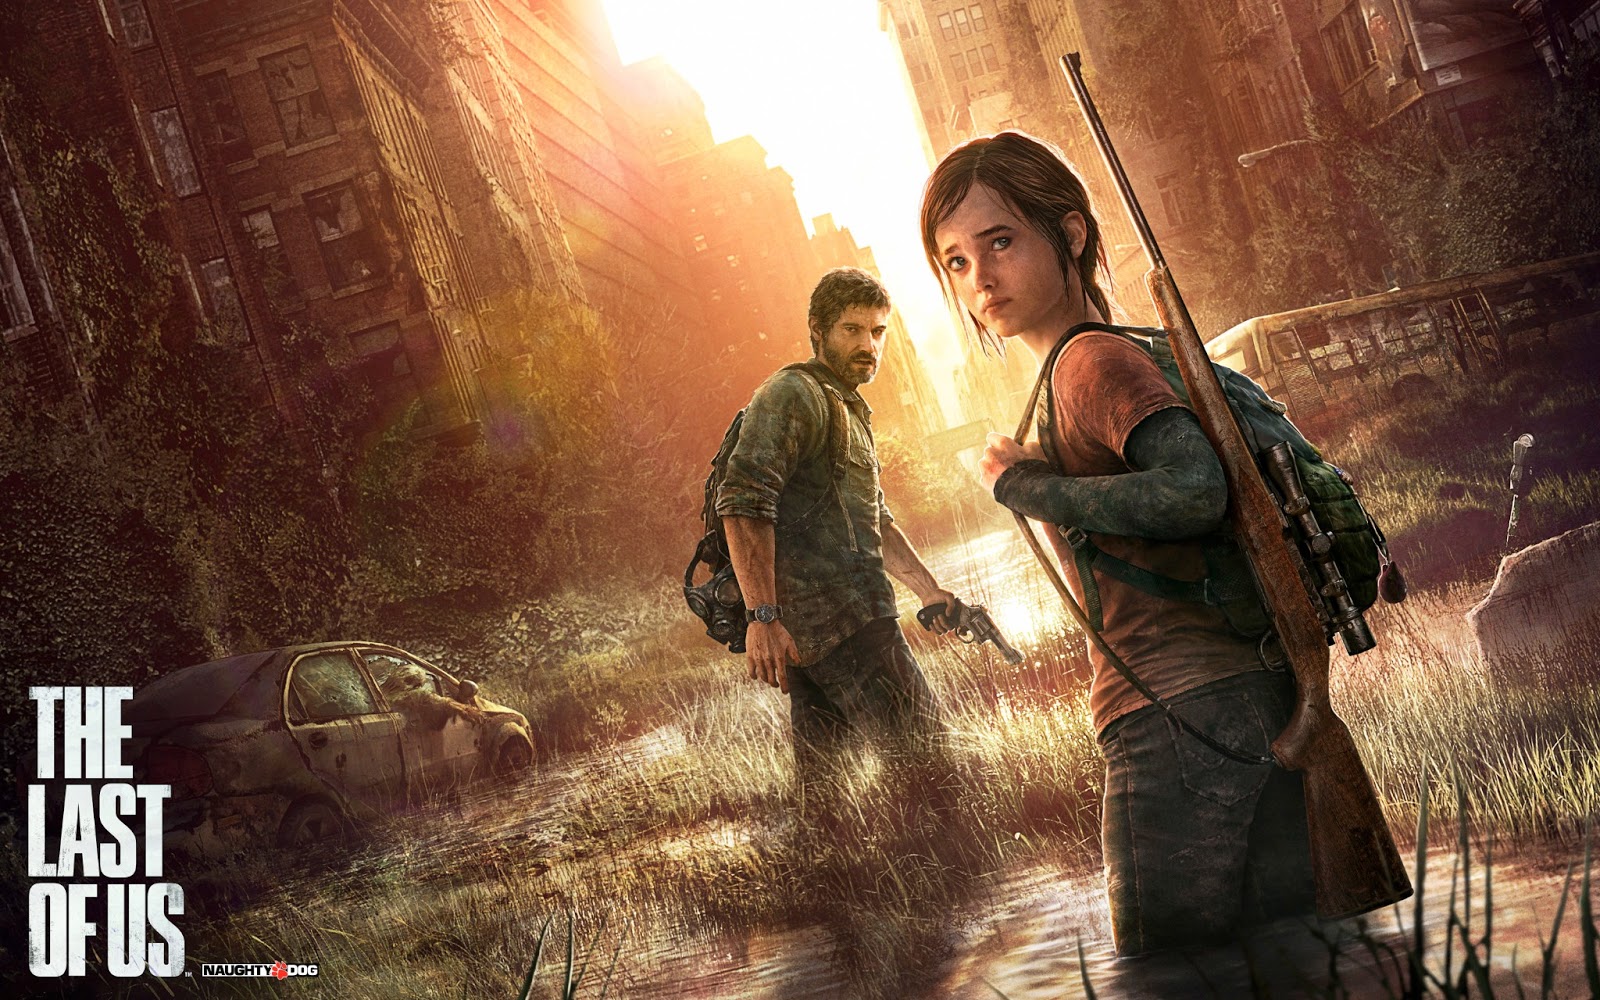 The Last of Us Part 2 Remastered - Brutal Combat & Aggressive Stealth Kills